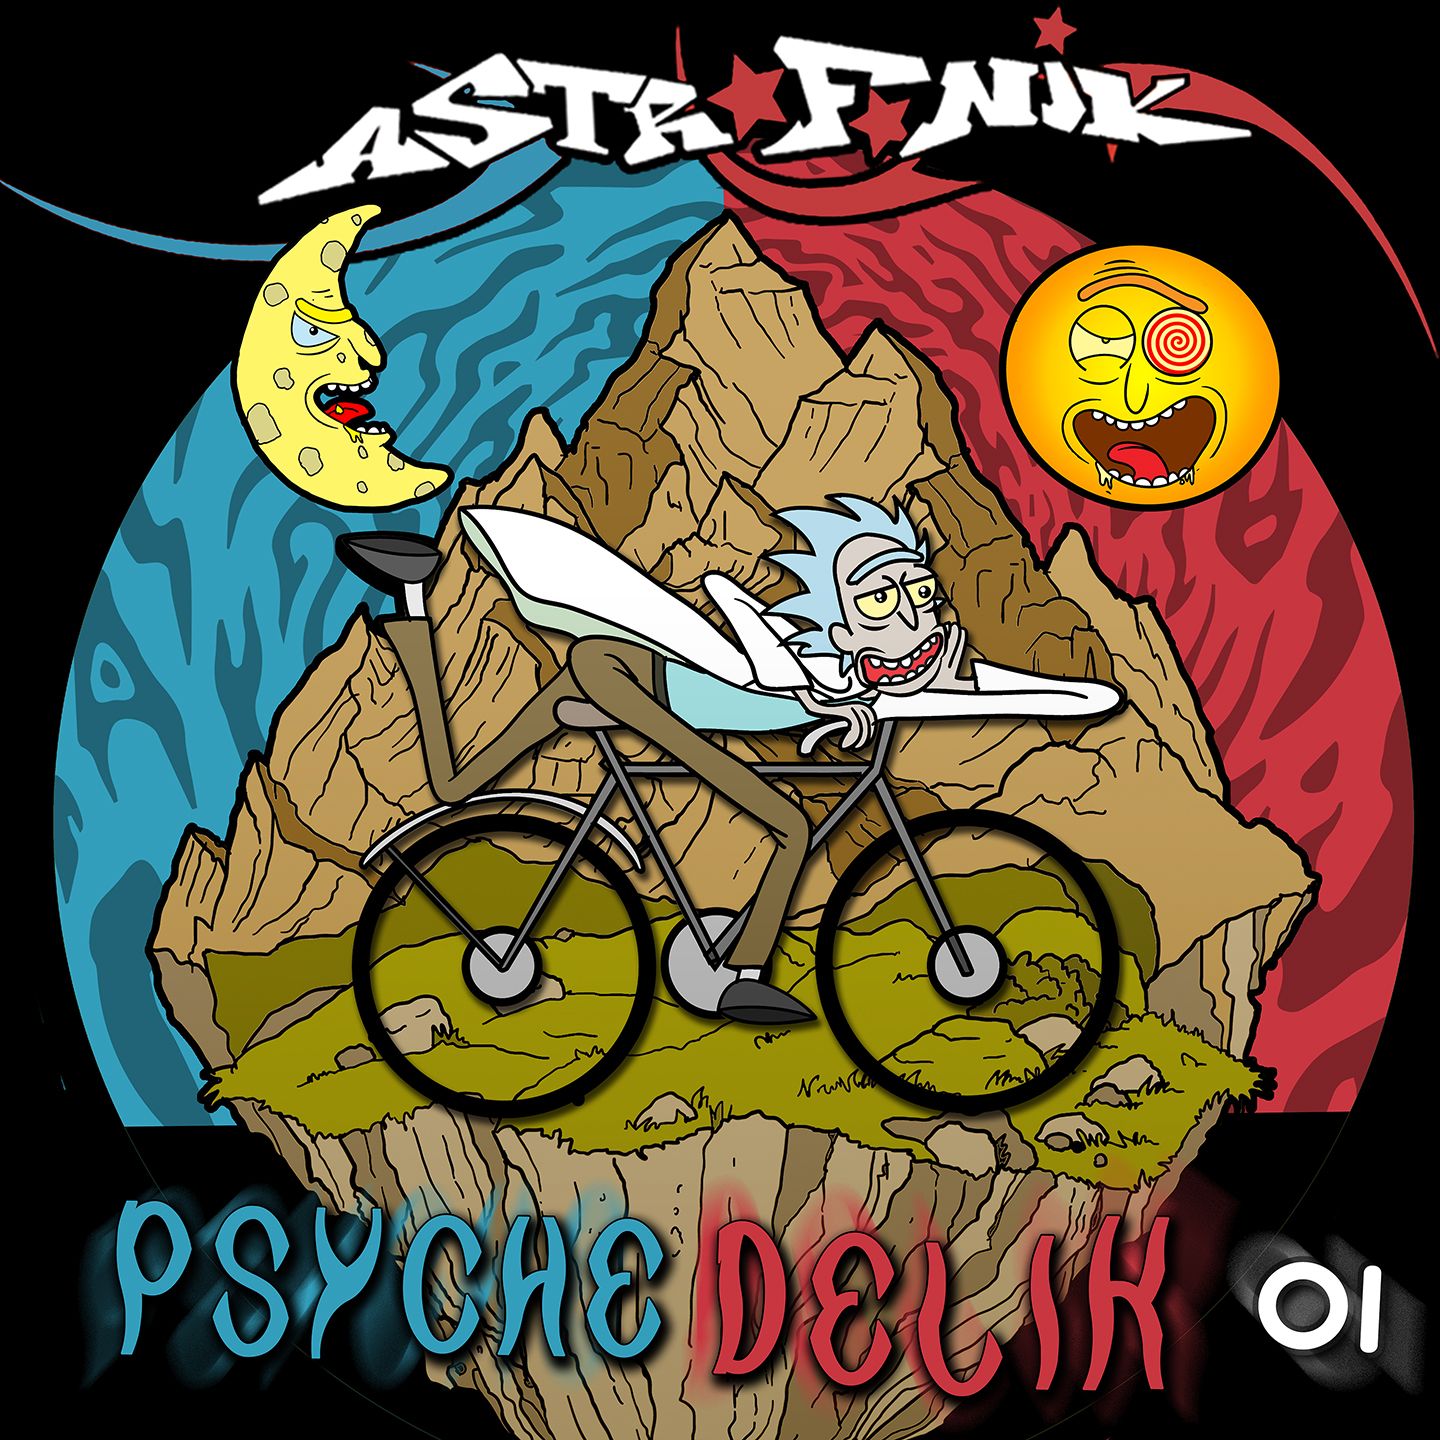 AstroFoniK PsychedeliK 01 V/A 2021